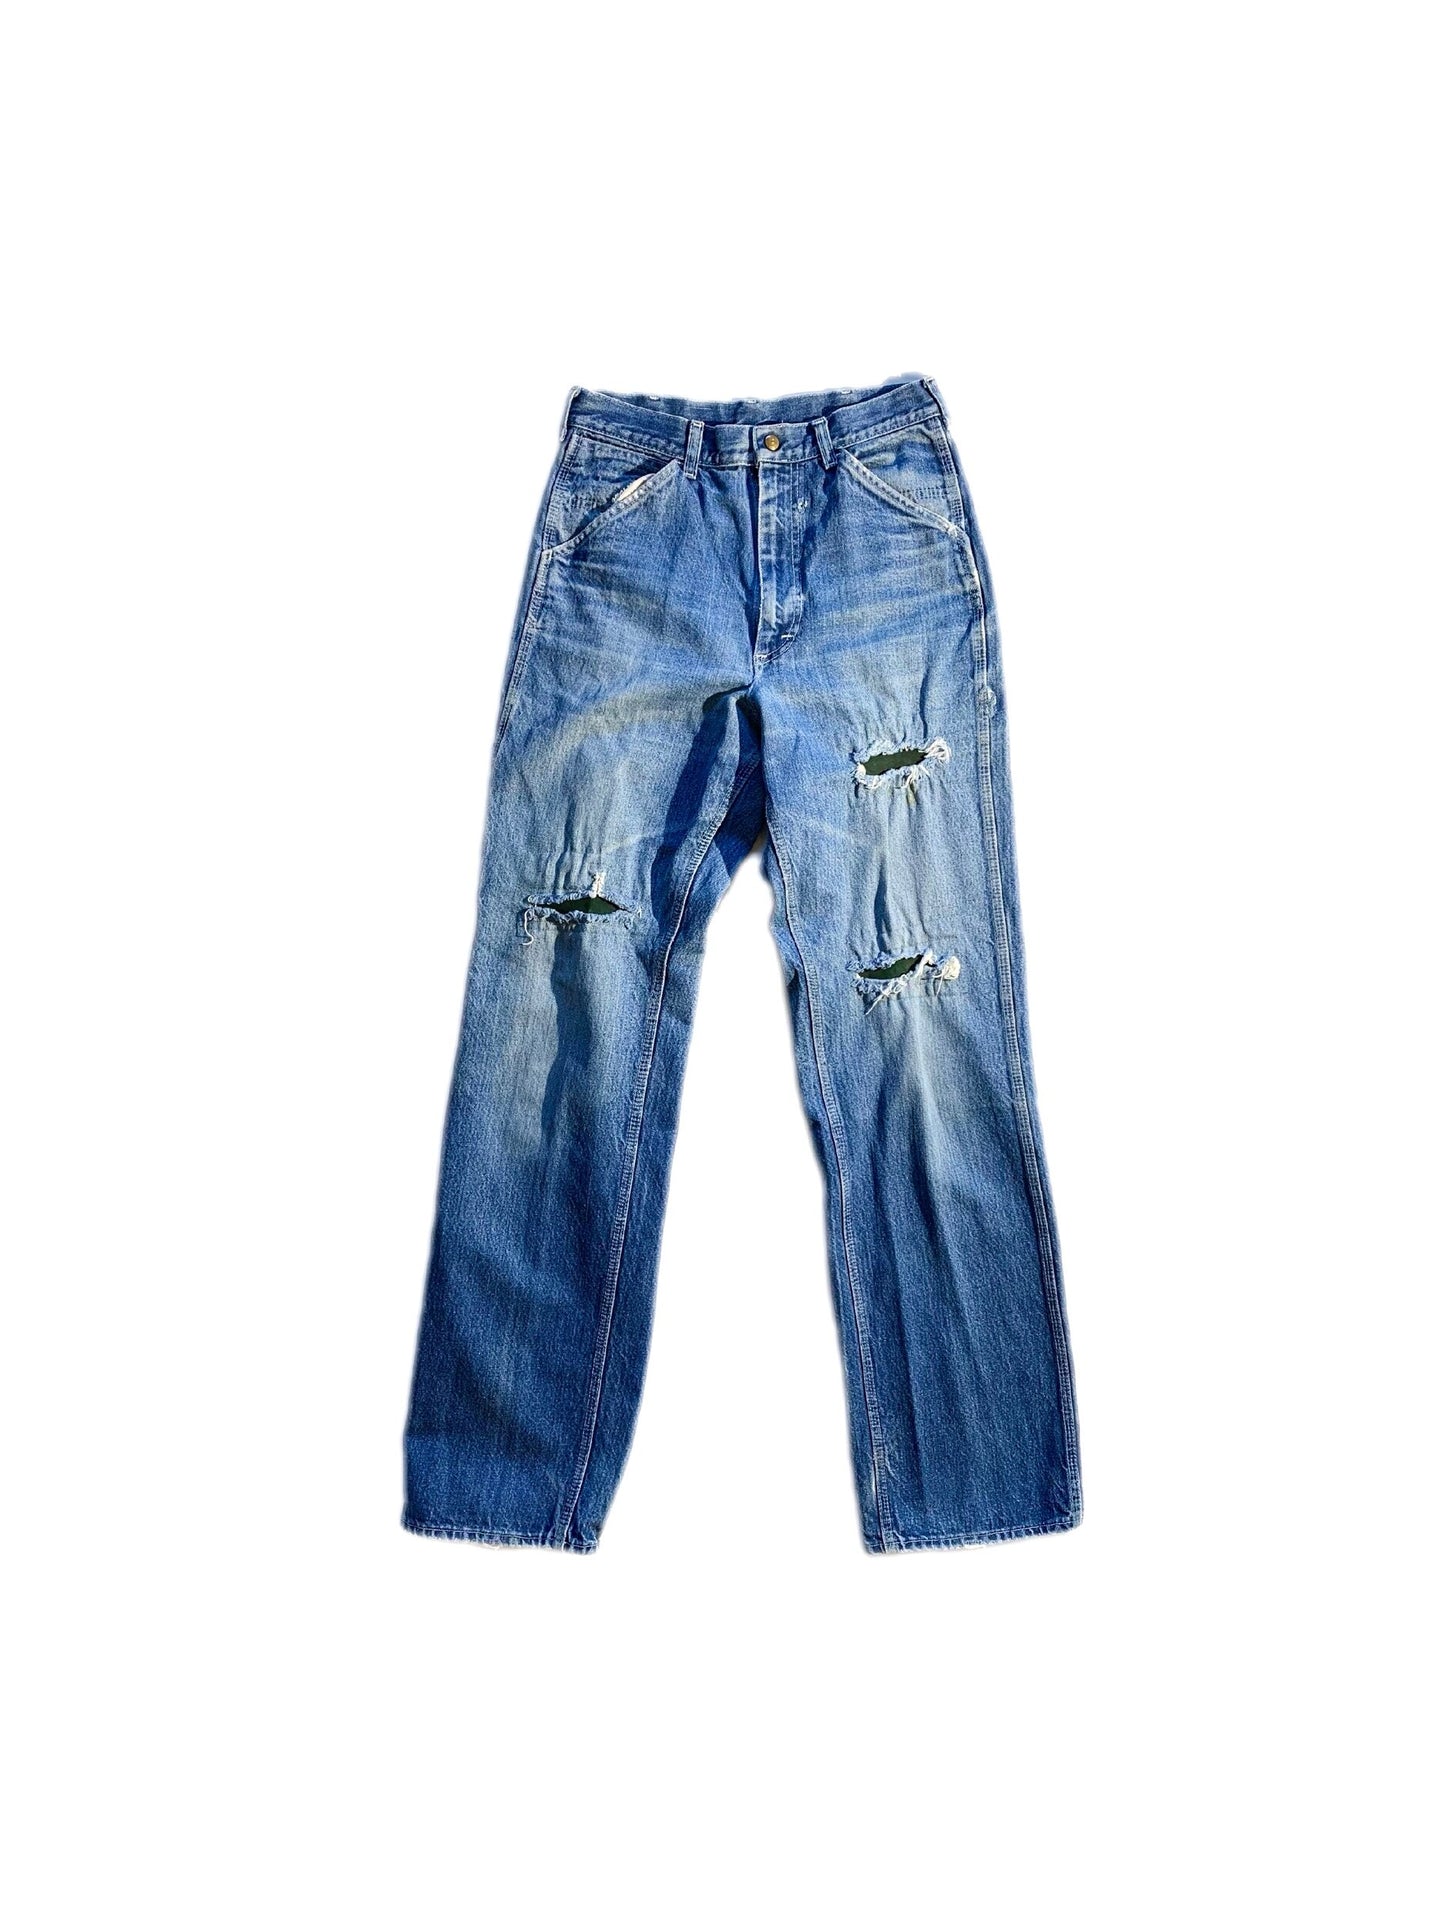 Vintage Lee Distressed Jeans Patchwork